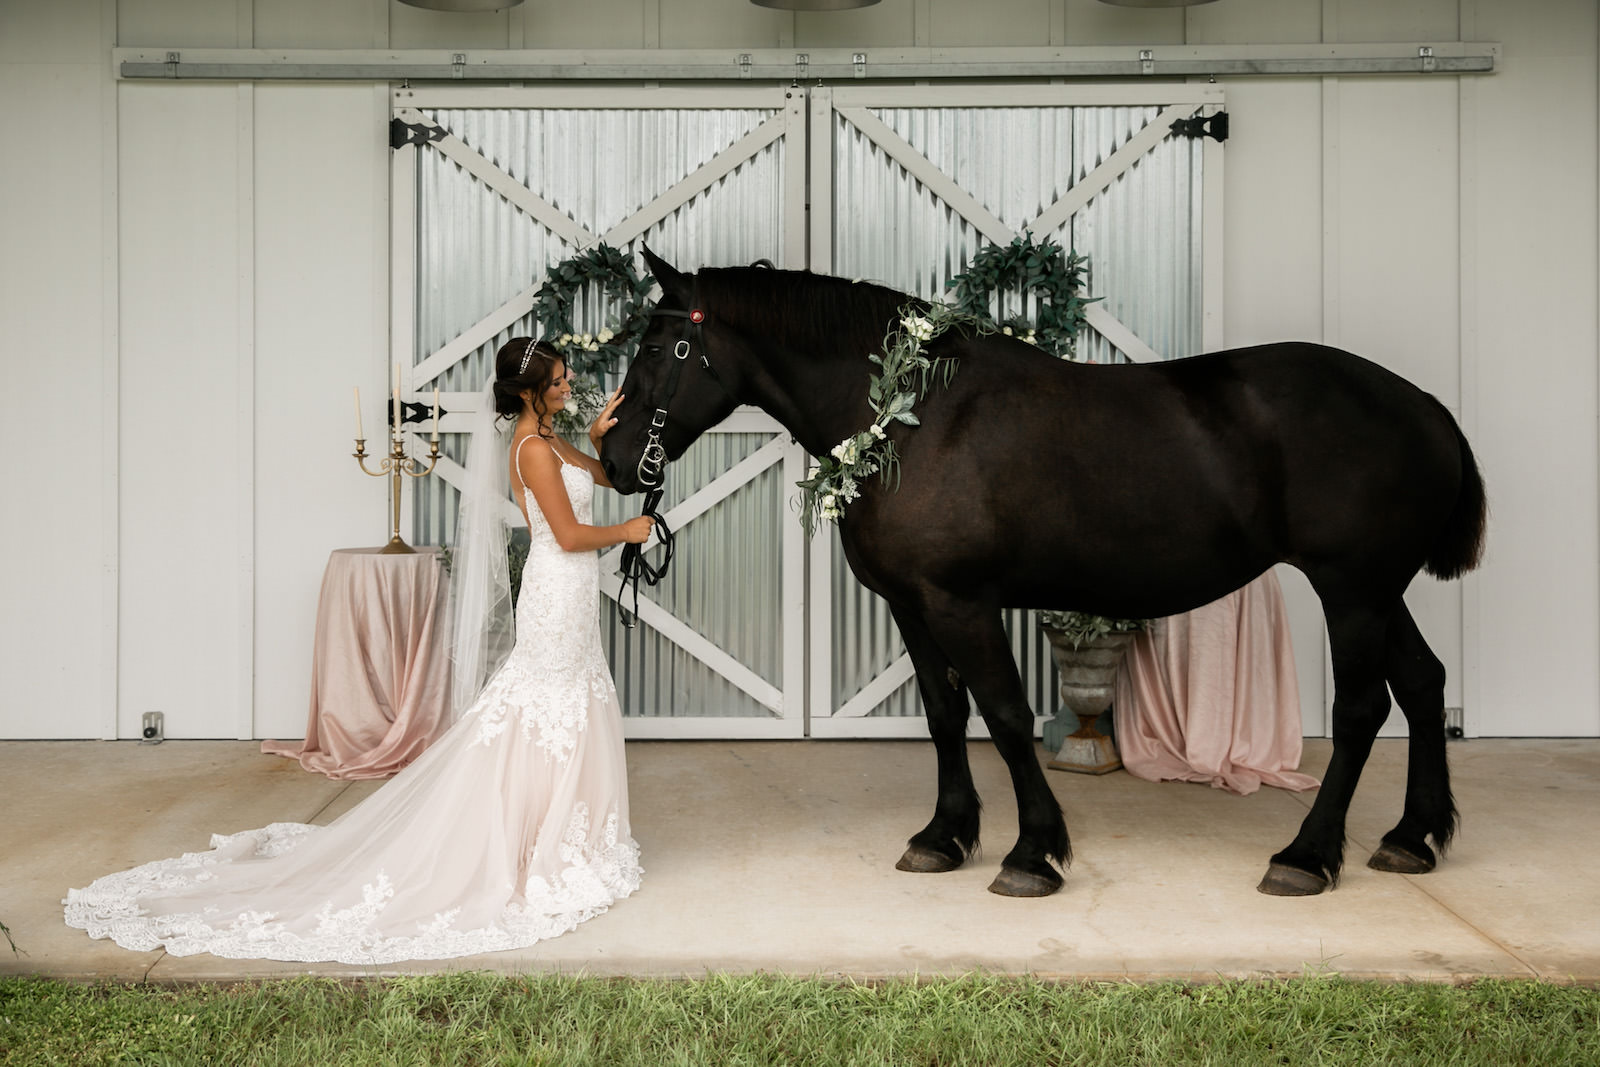 Bride in Long Train Sweetheart Neckline Gown with Horse Rustic Wedding Portrait | Tampa Farm Wedding Covington Farms